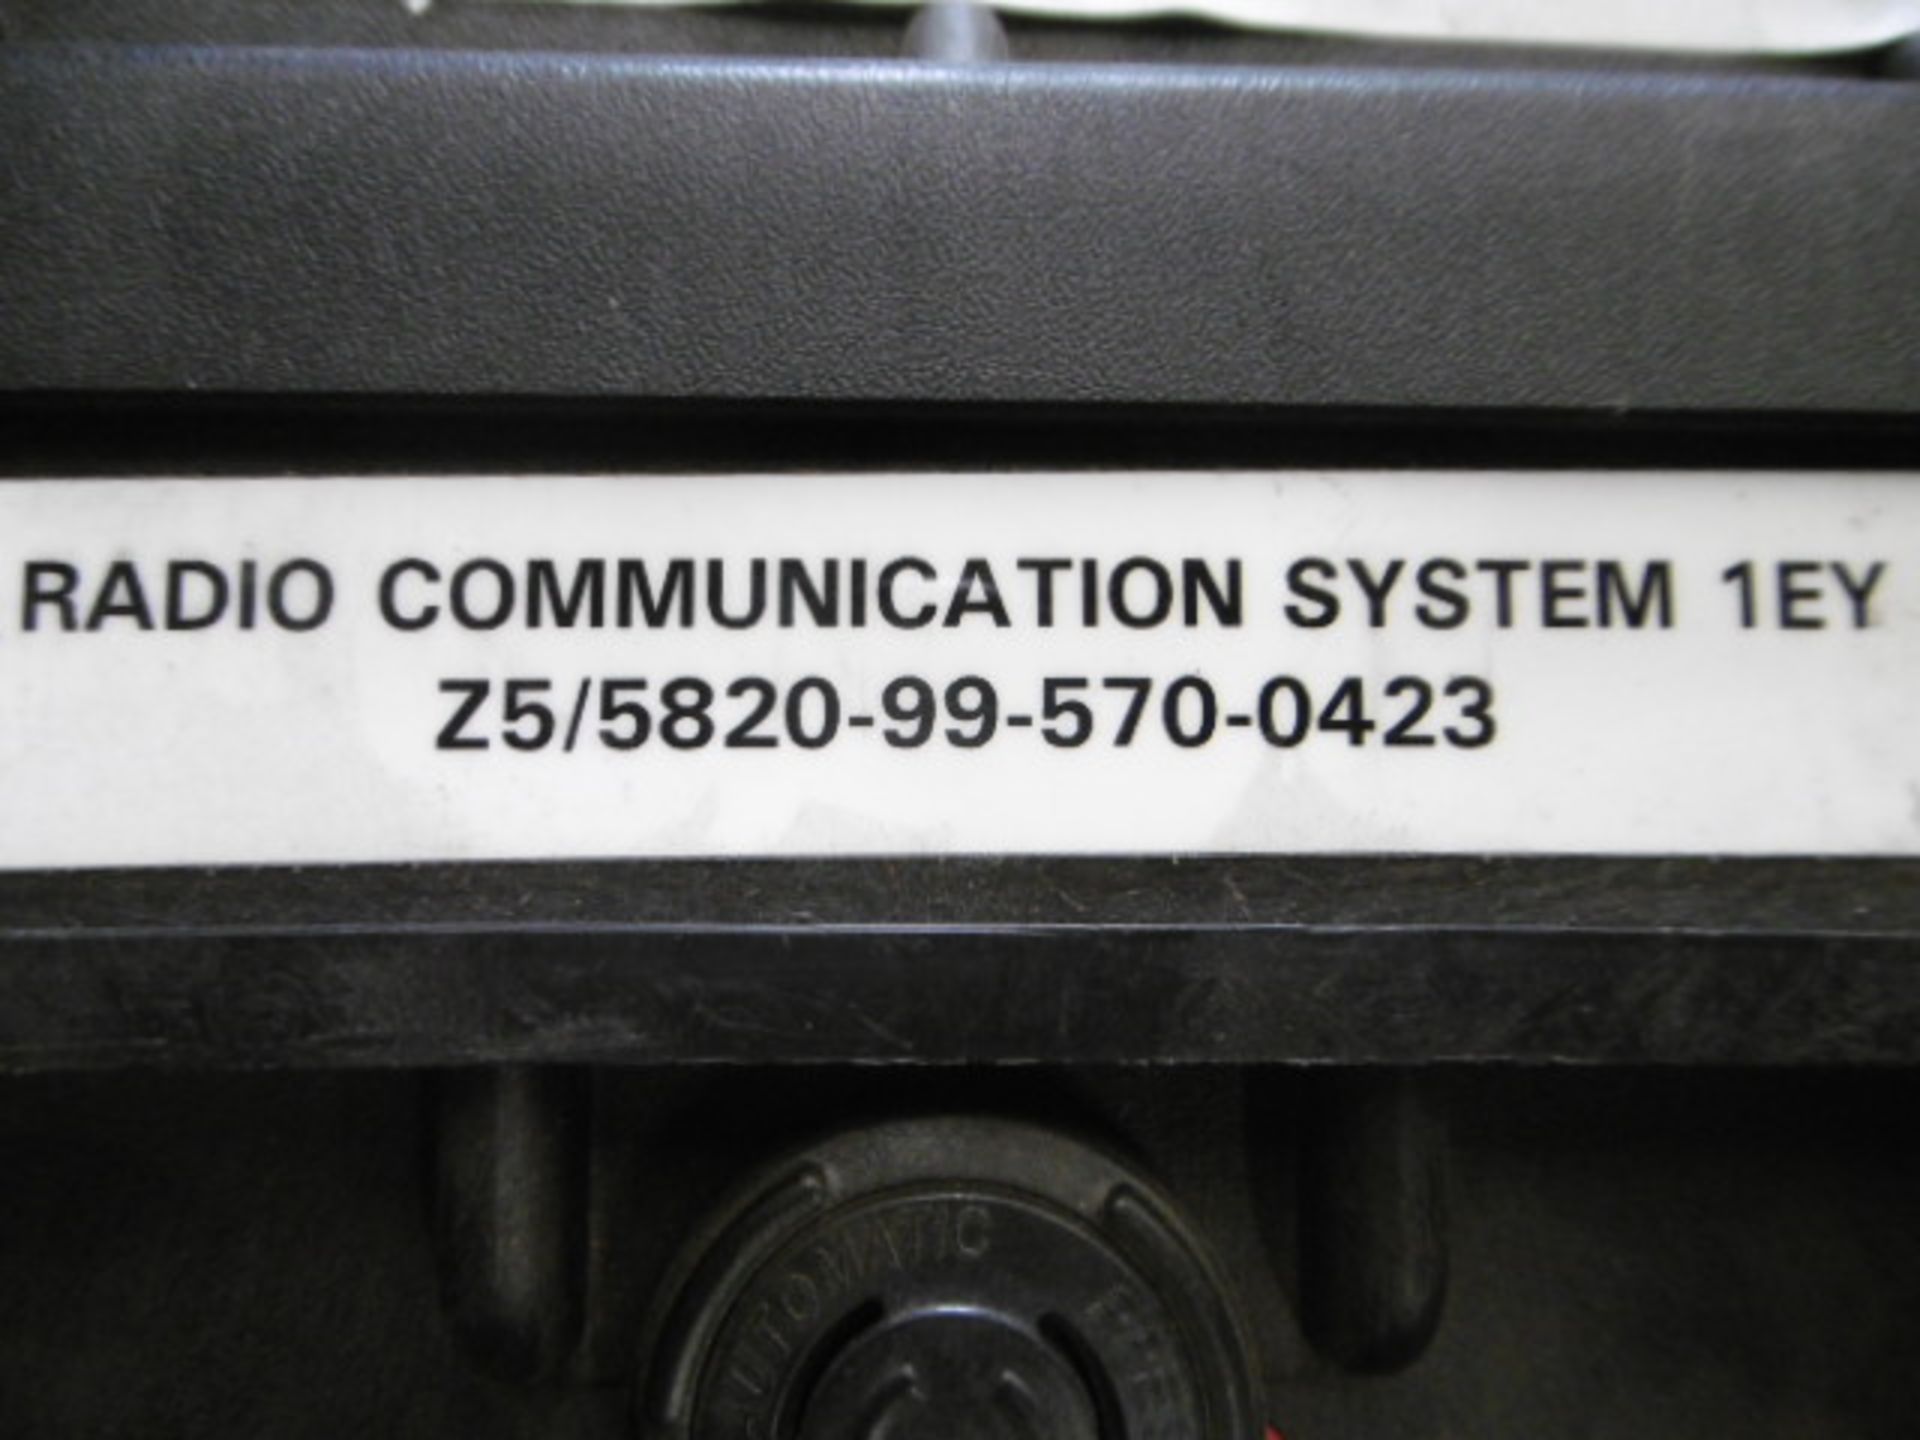 Radio Communication System in Secure Peli Case - Image 11 of 12